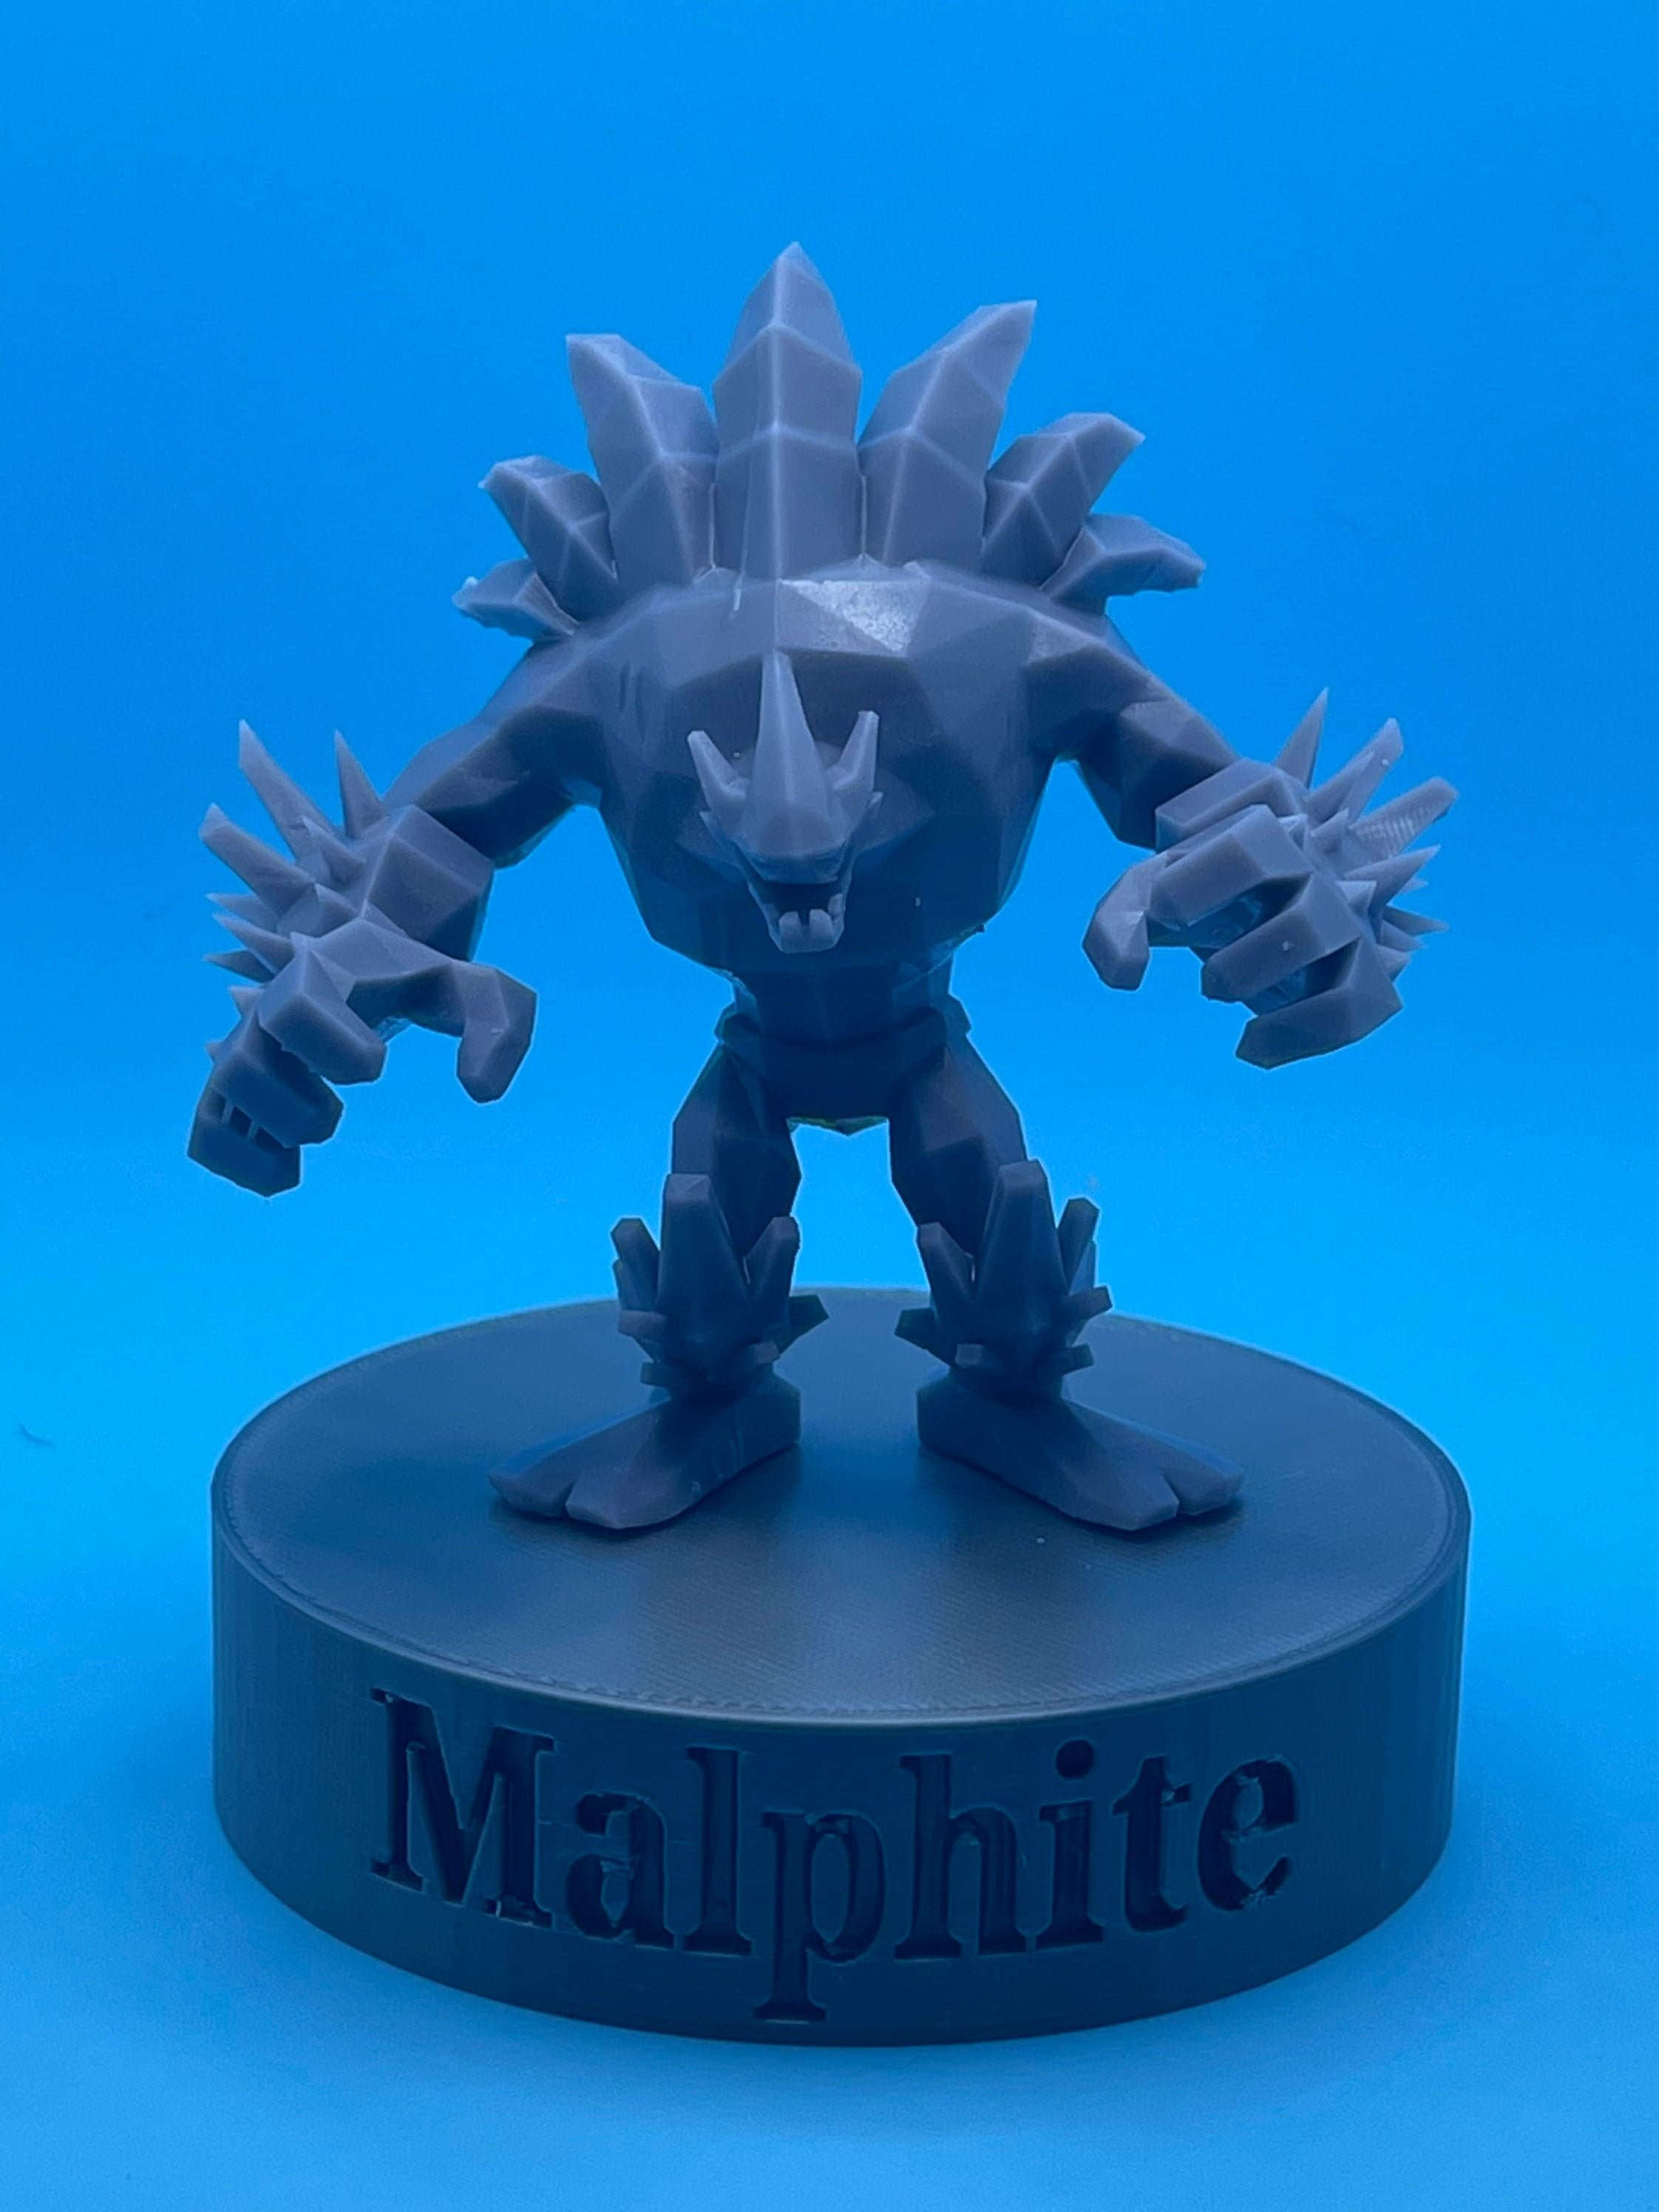 Malphite, Shard of the Monolith - League of Legends